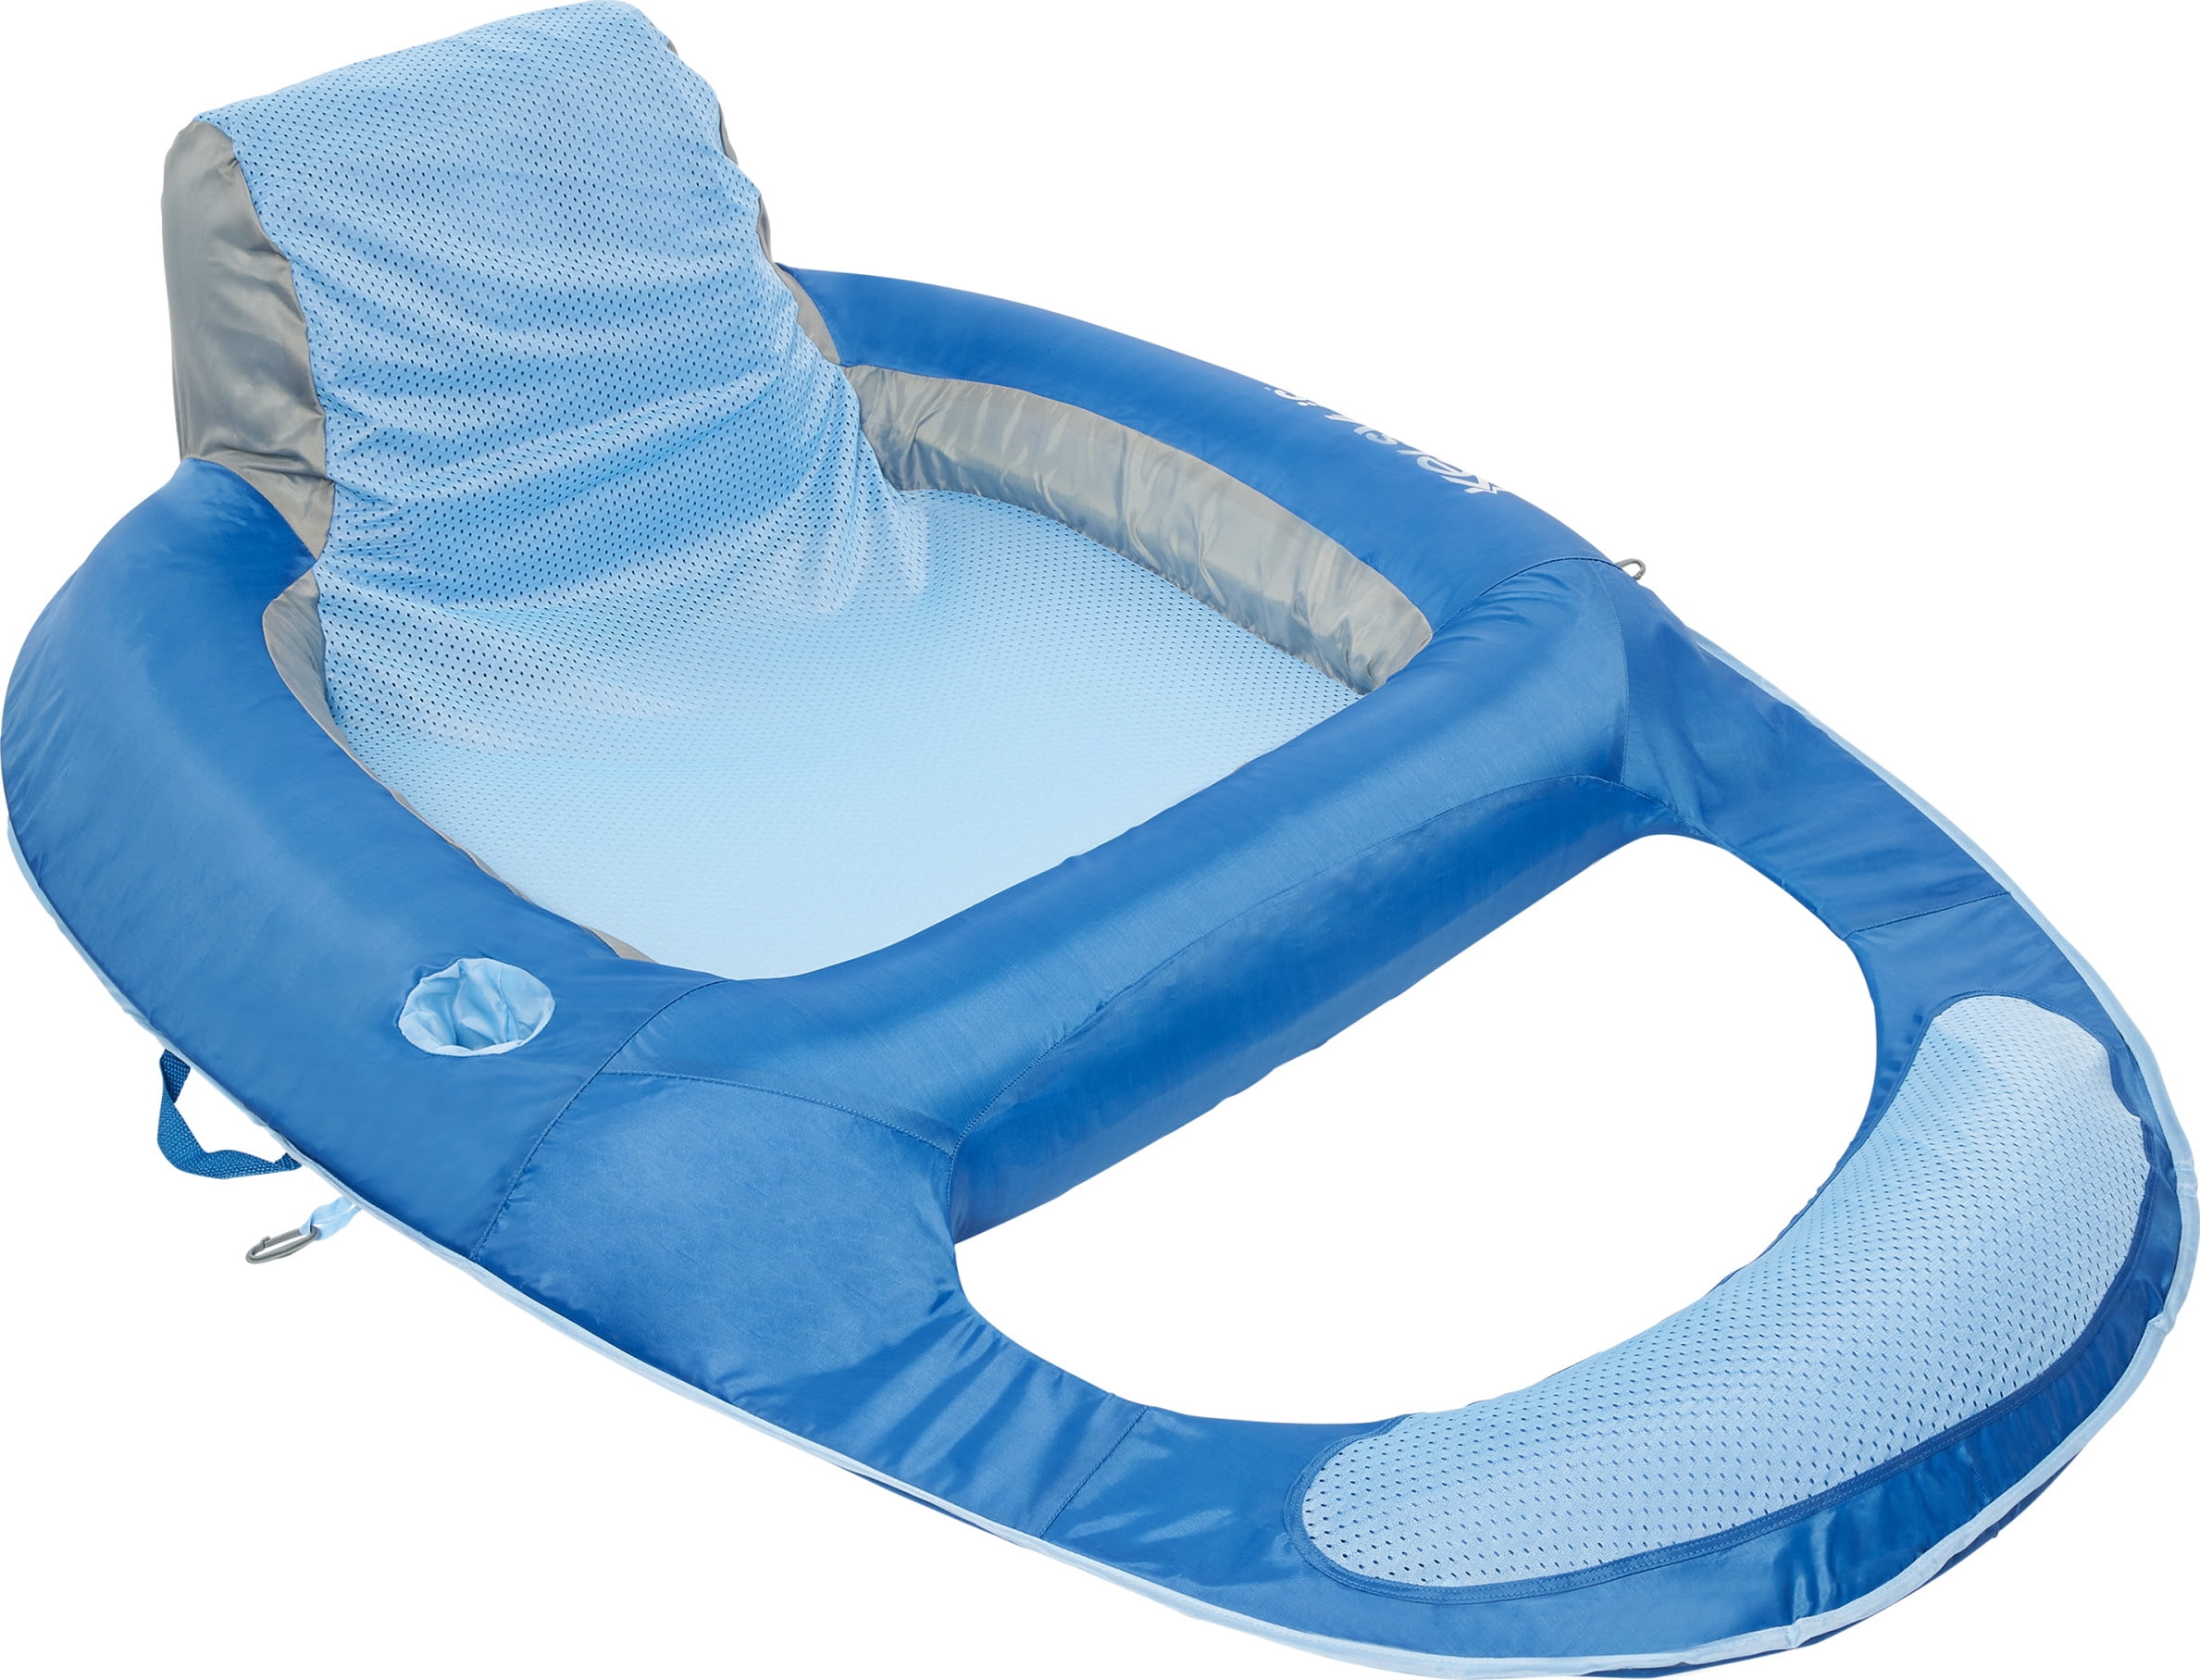 Details about   Swimline Sunsoft Sunchaser Adjustable 50" x 32" Lounge Swimming Pool Float 